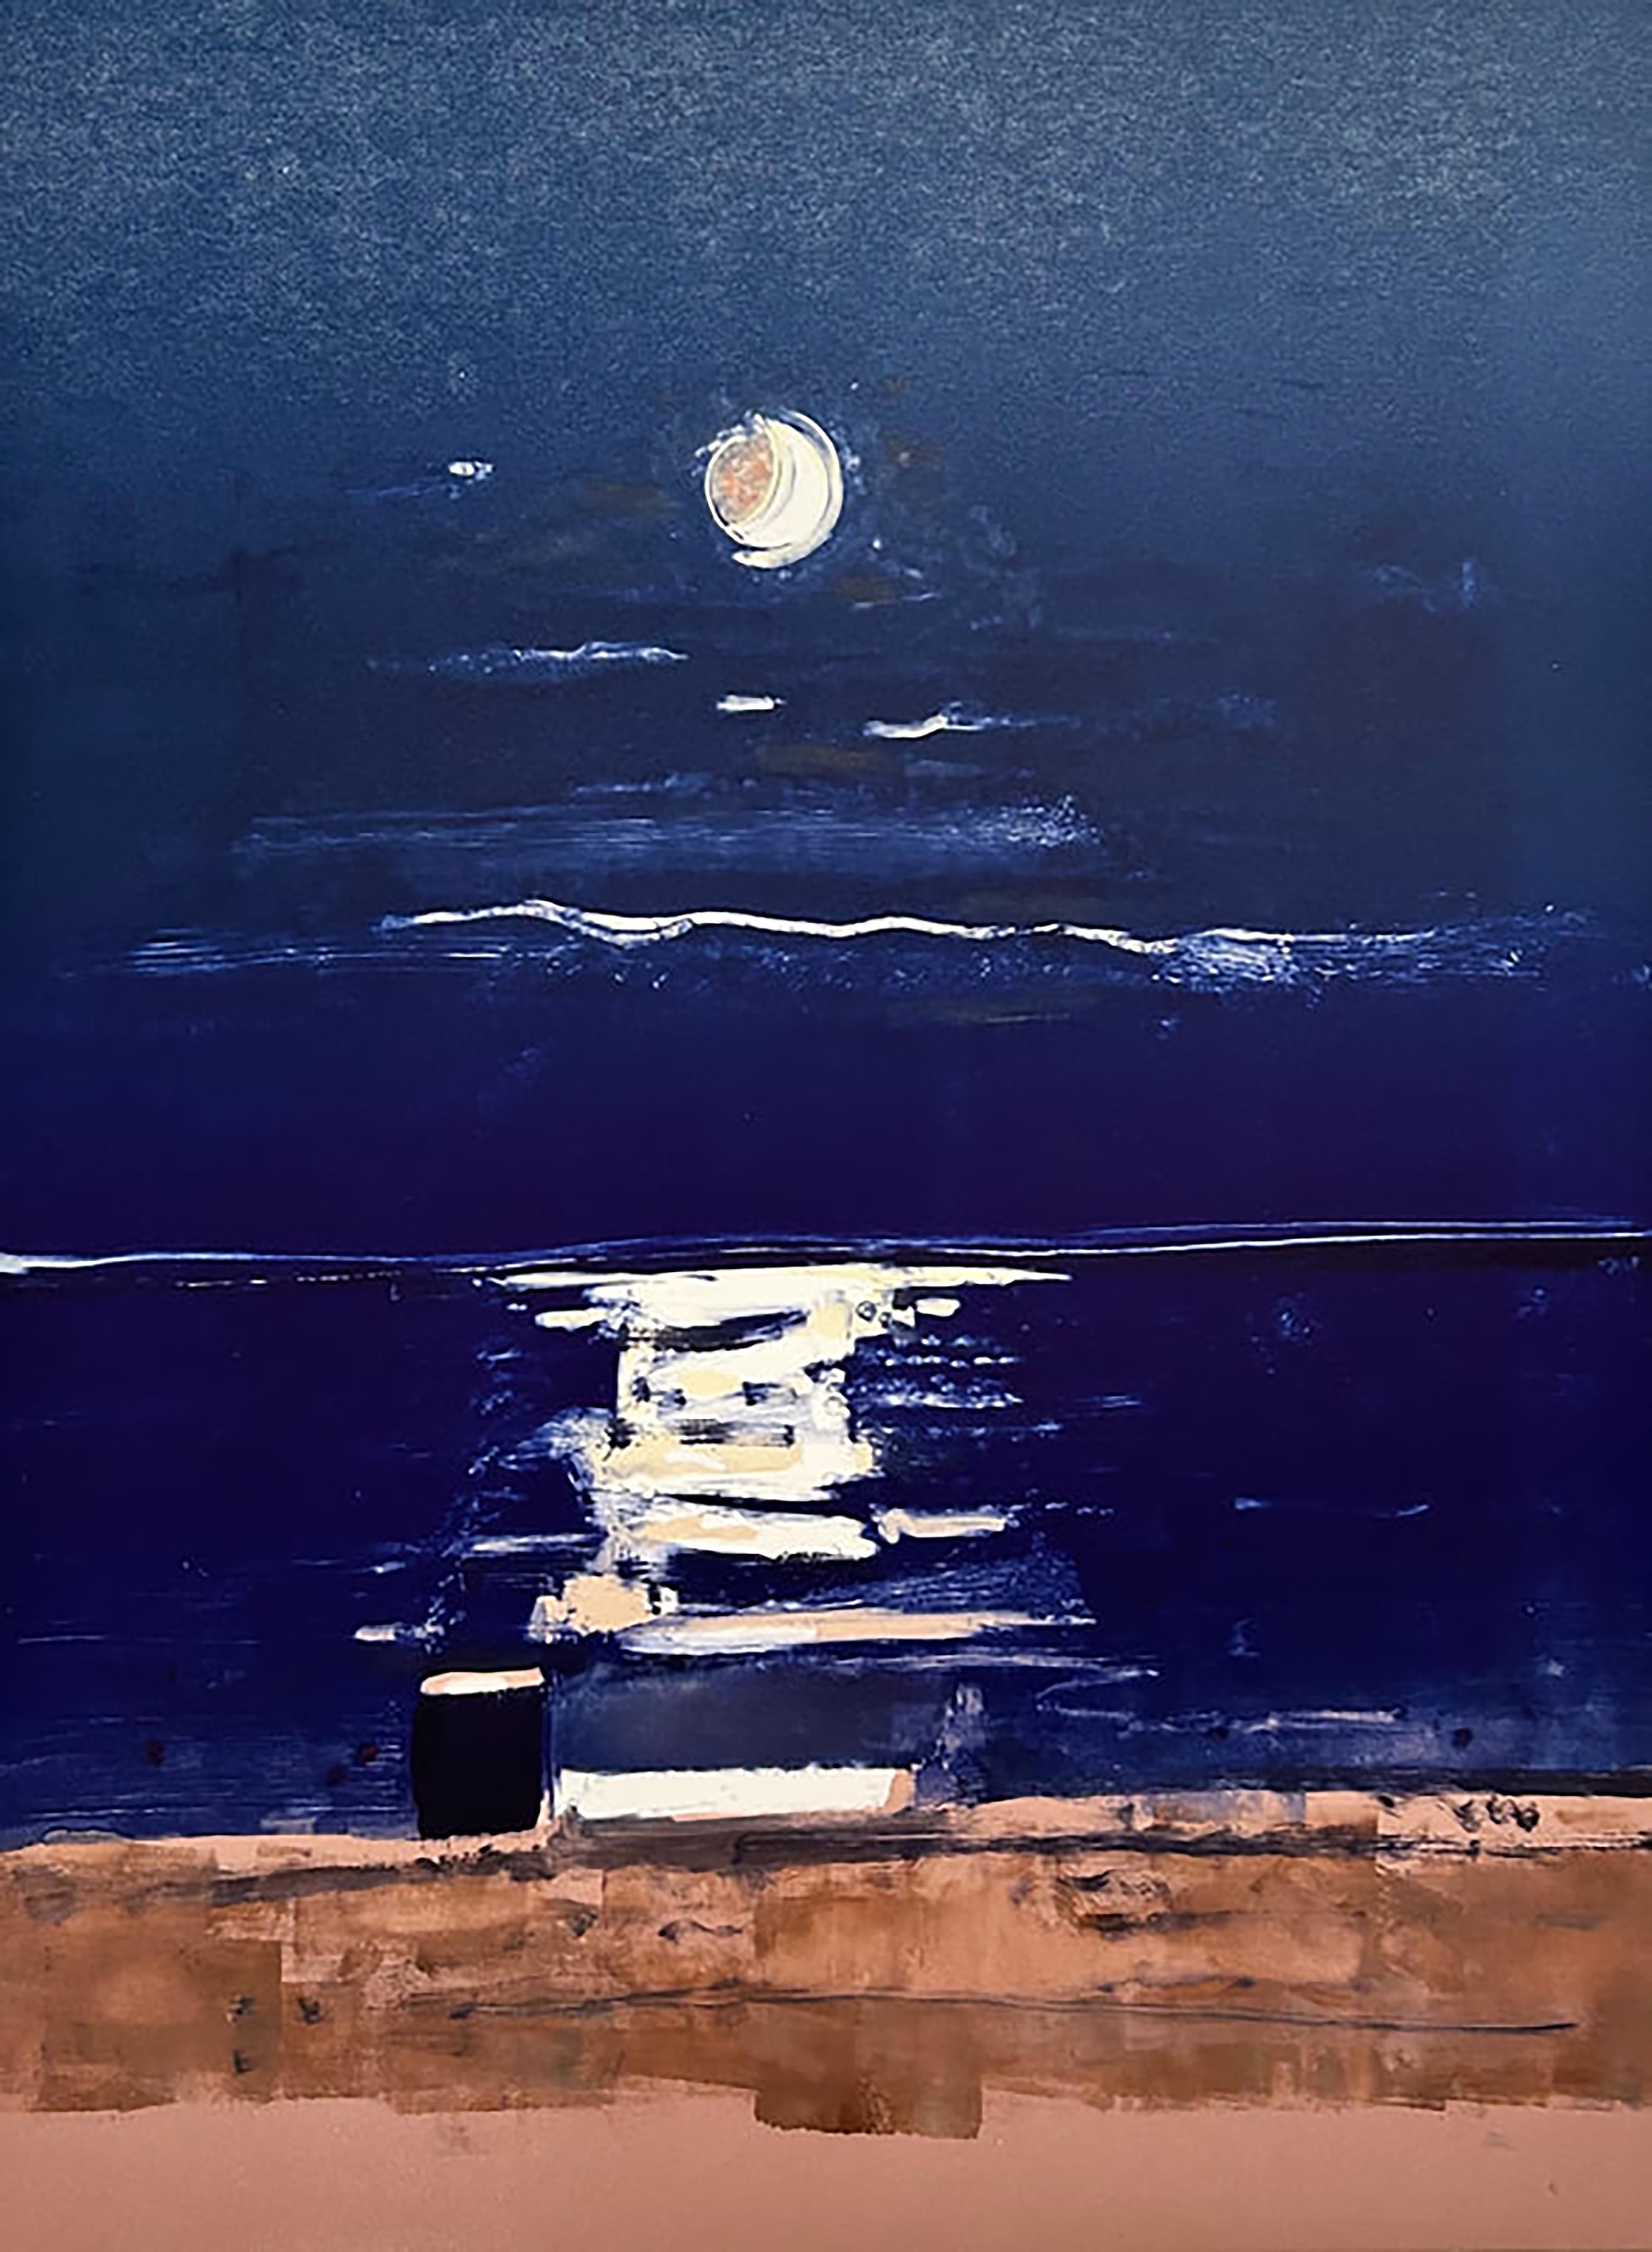 Moonlight on Water #3